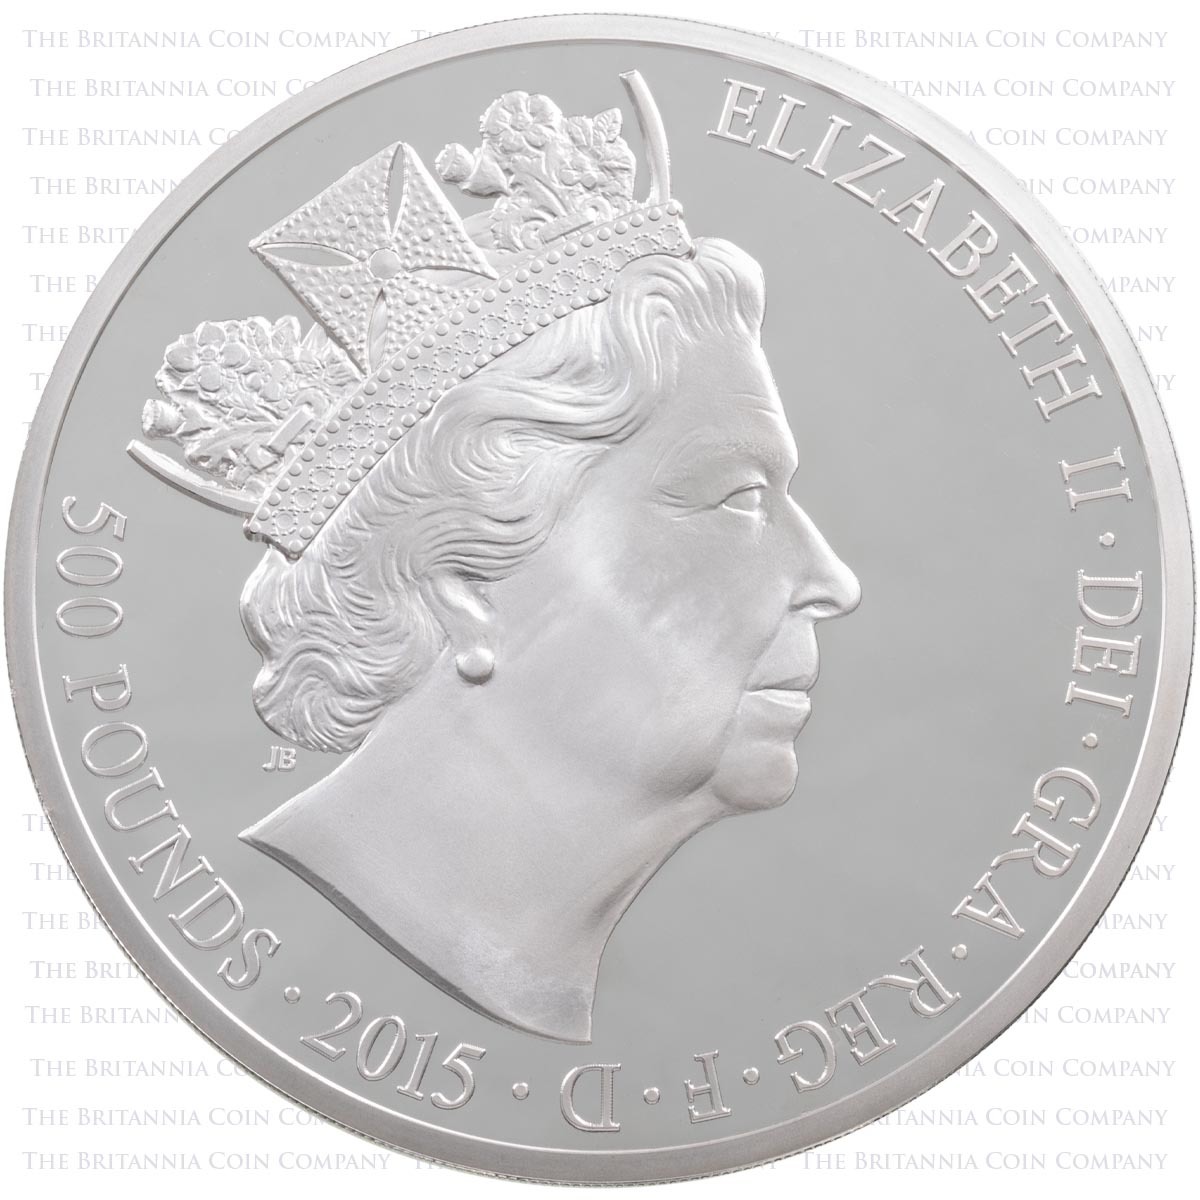 UKLRMGK 2015 Longest Reigning Monarch One Kilogram Silver Proof Coin Obverse